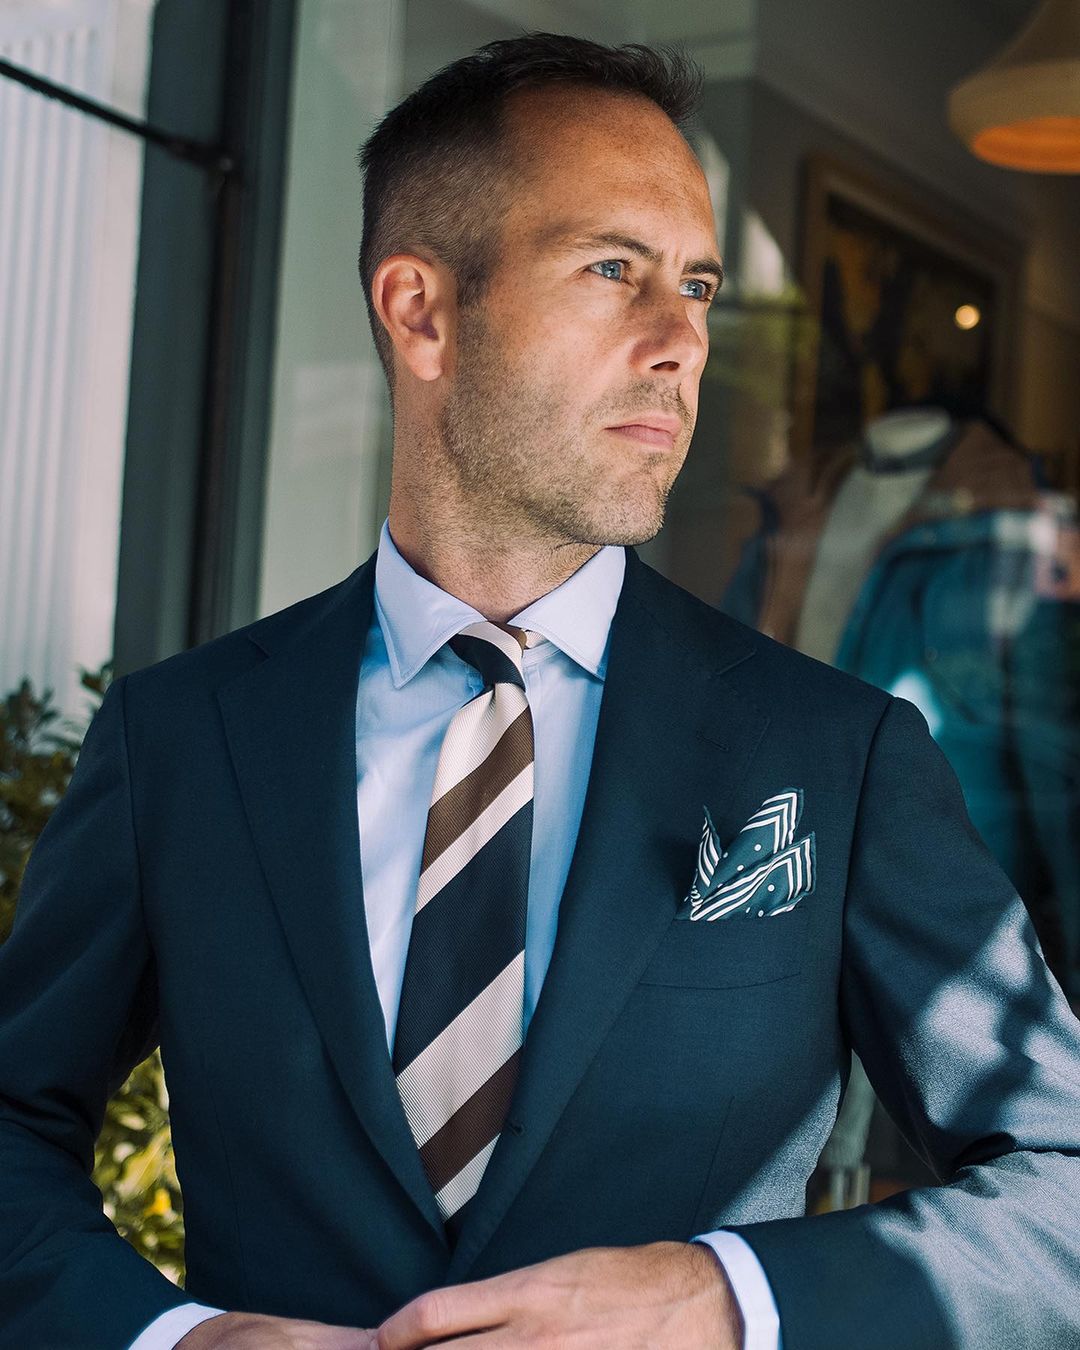 Smart Casual、Formal及Travel Suit有何分別？男裝品牌Trunk主理人Mats Klingberg分享西裝穿搭要點